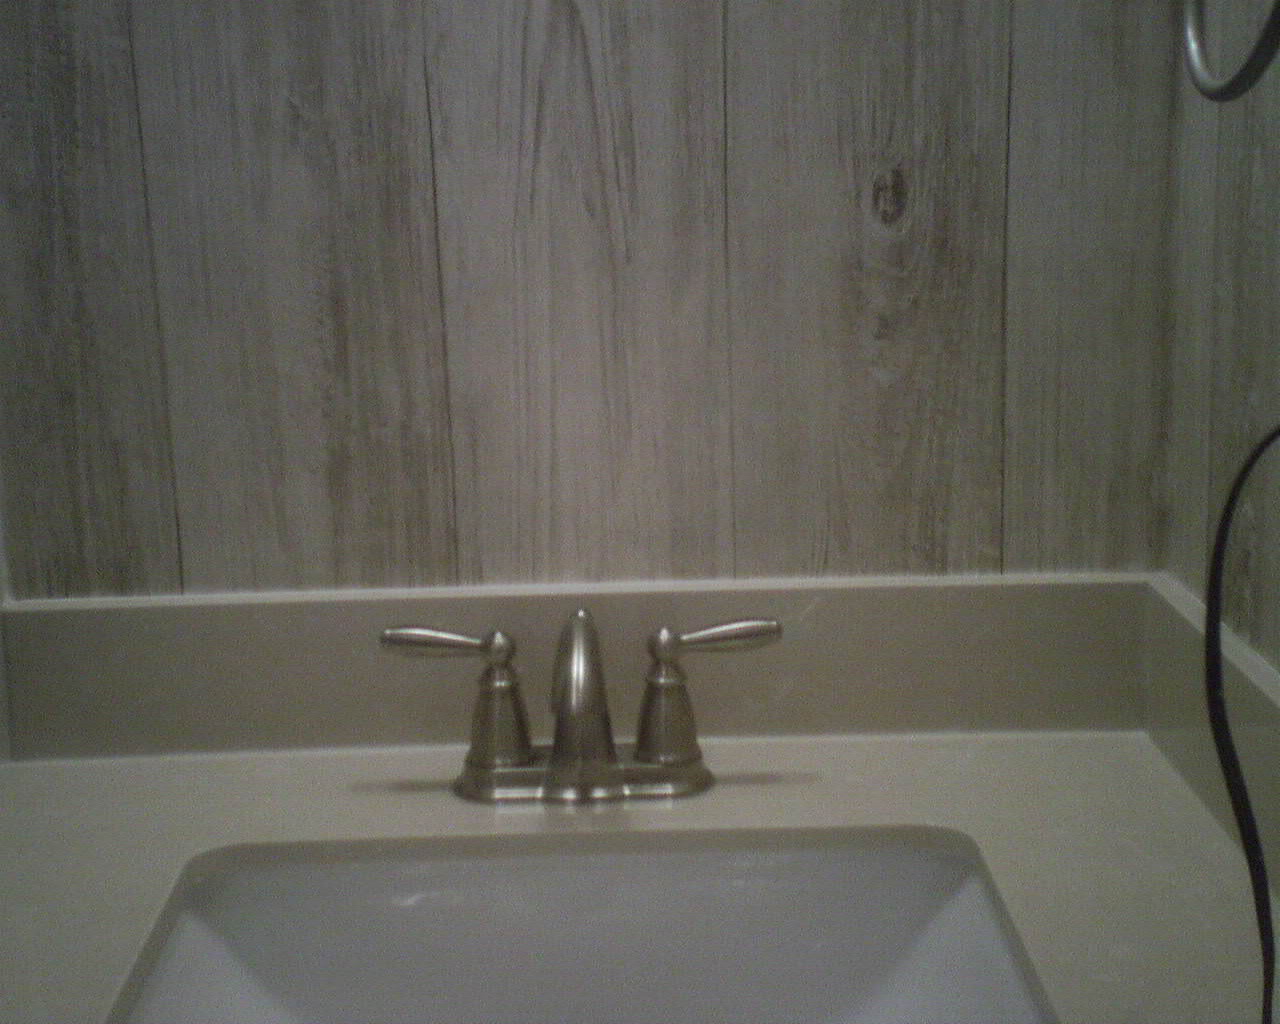 wallpaper that looks like wood paneling,sink,bathroom sink,tap,property,tile